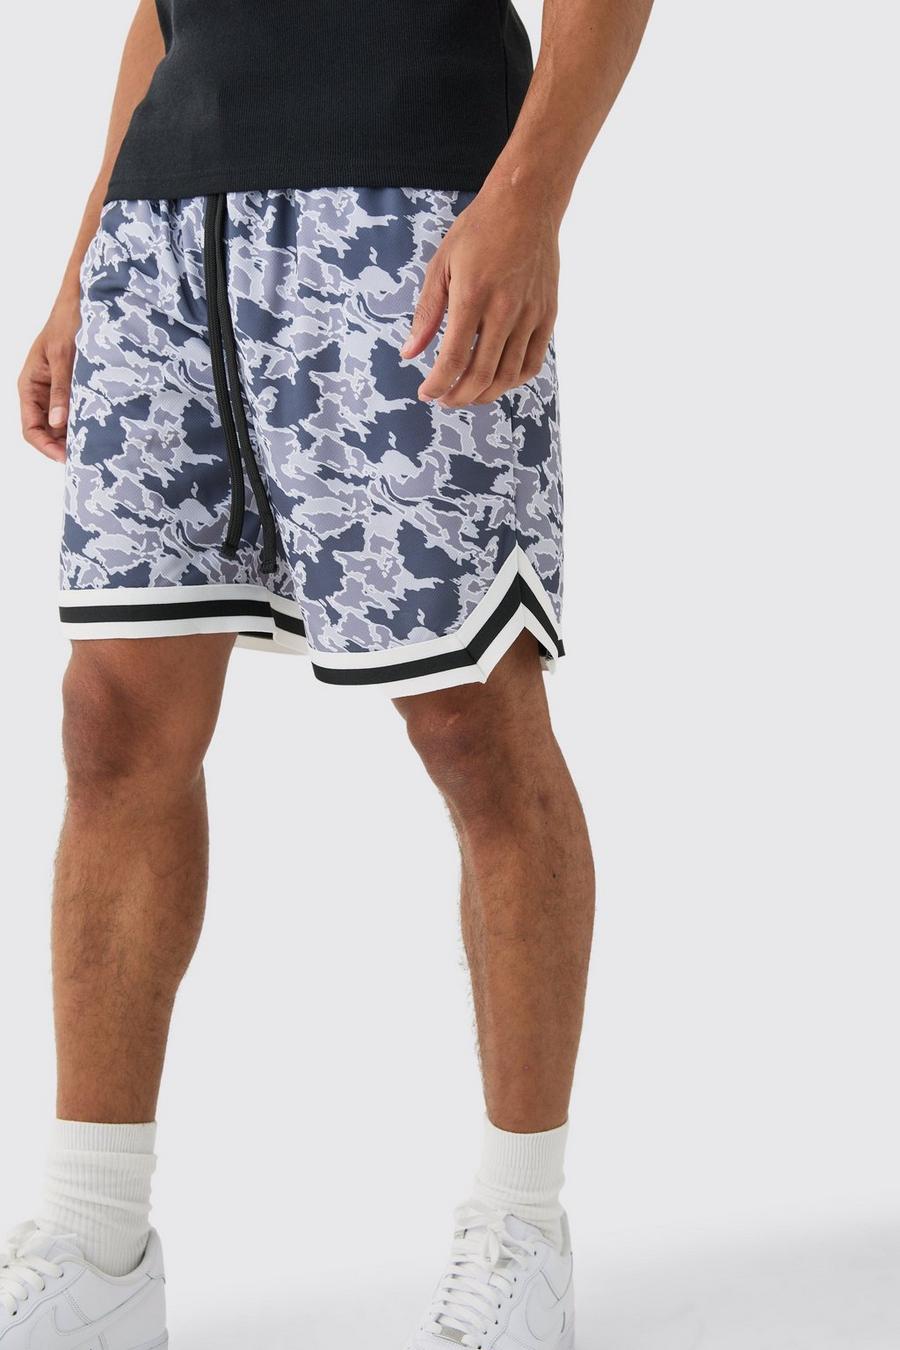 Lockere mittellange Camouflage Mesh Basketball-Shorts, Black